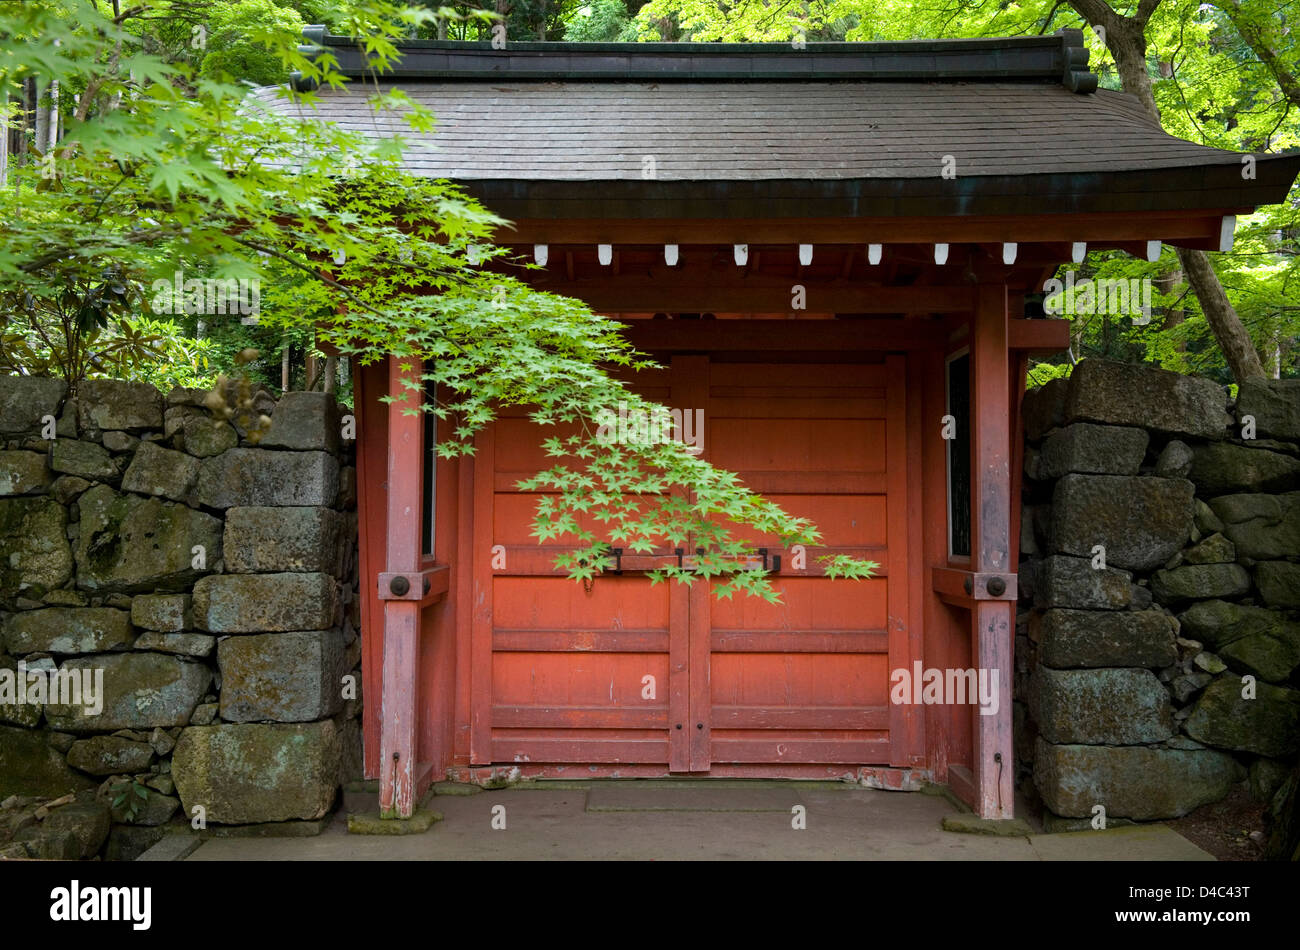 Japanese maple trees surround the vermilion Suzakumon Gate at the Tendai sect Sanzenin Temple in Ohara, Kyoto, Japan. Stock Photo